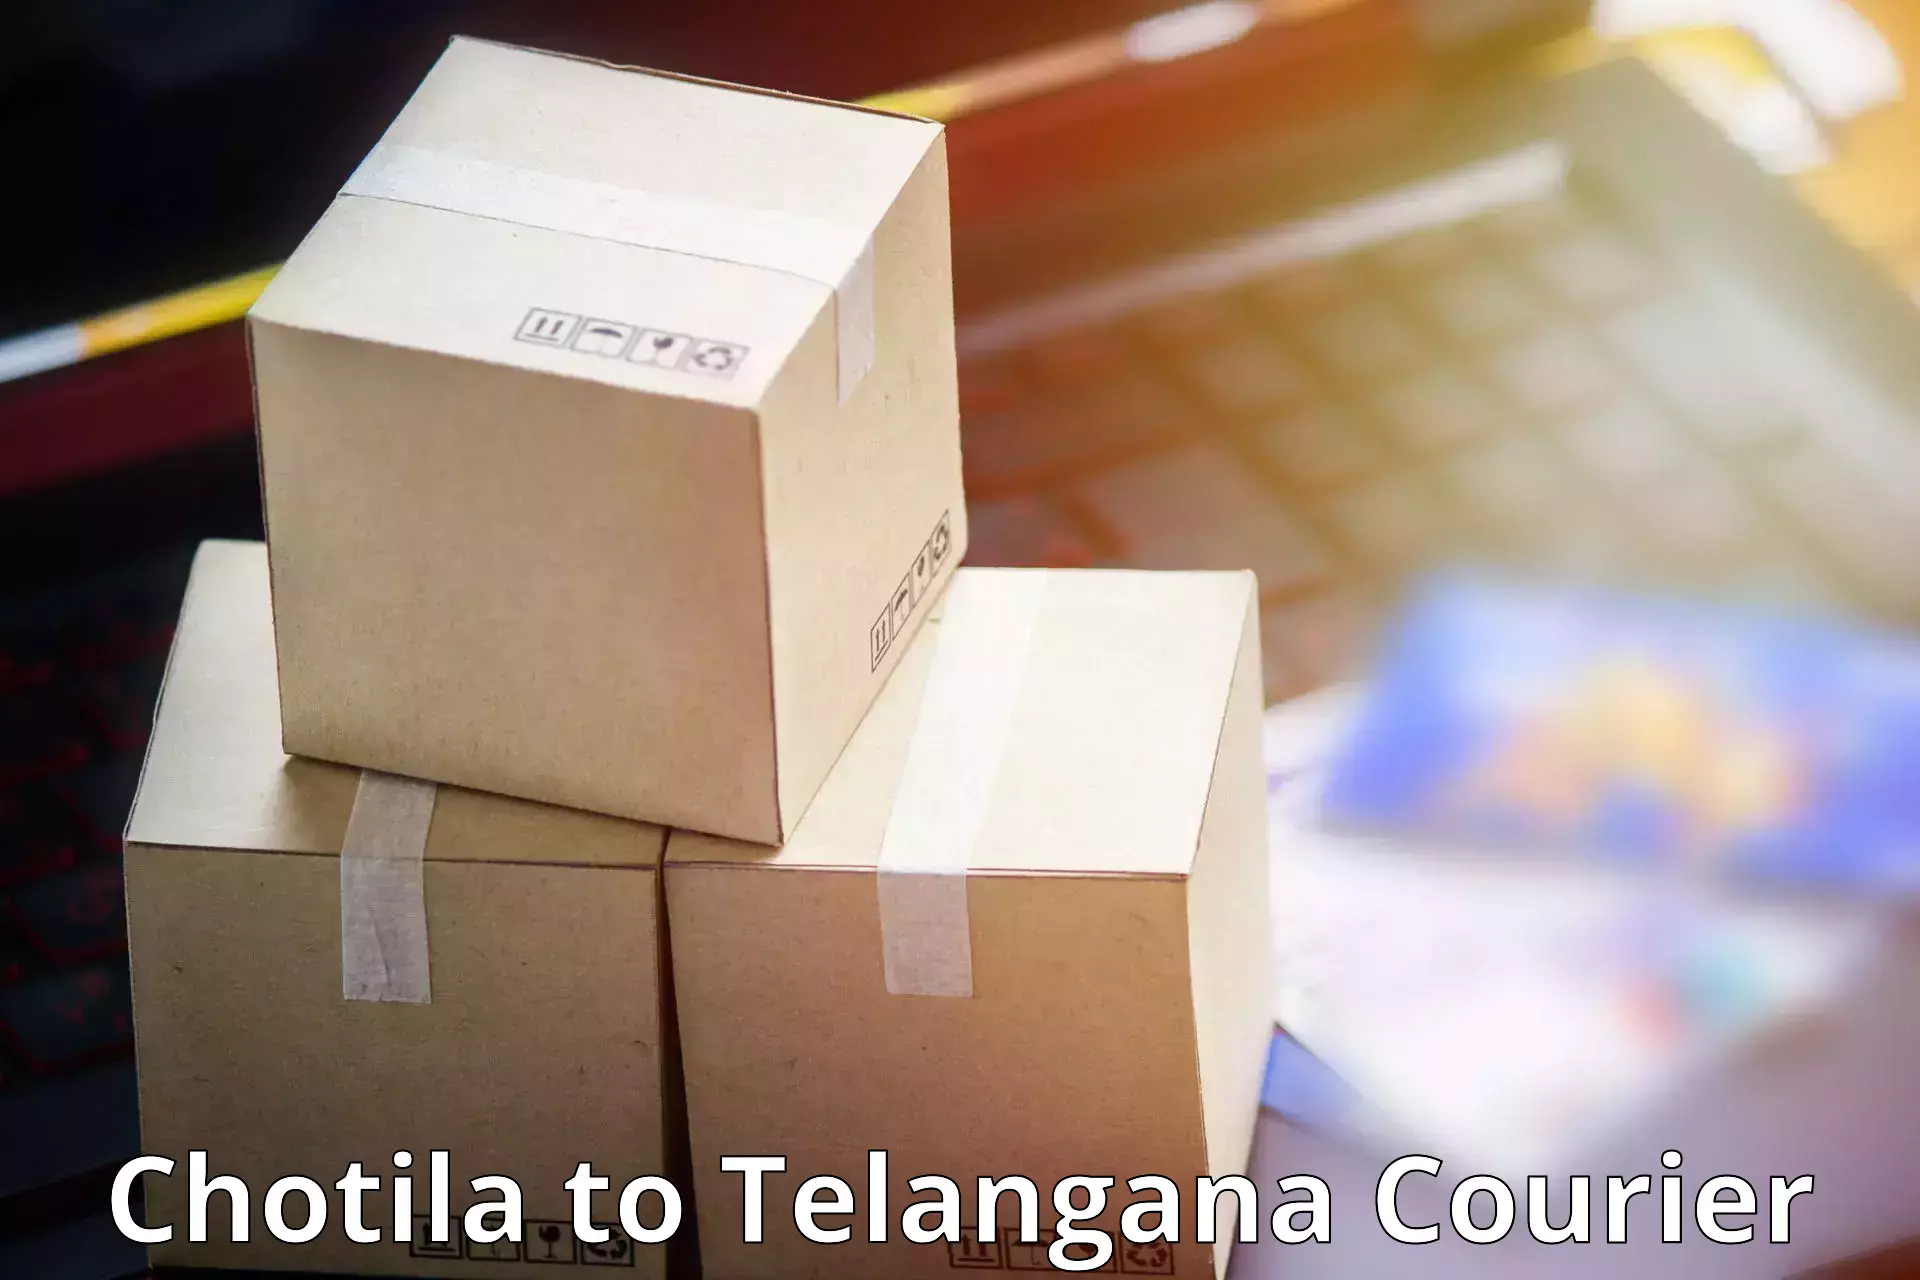 Courier service partnerships Chotila to Jannaram